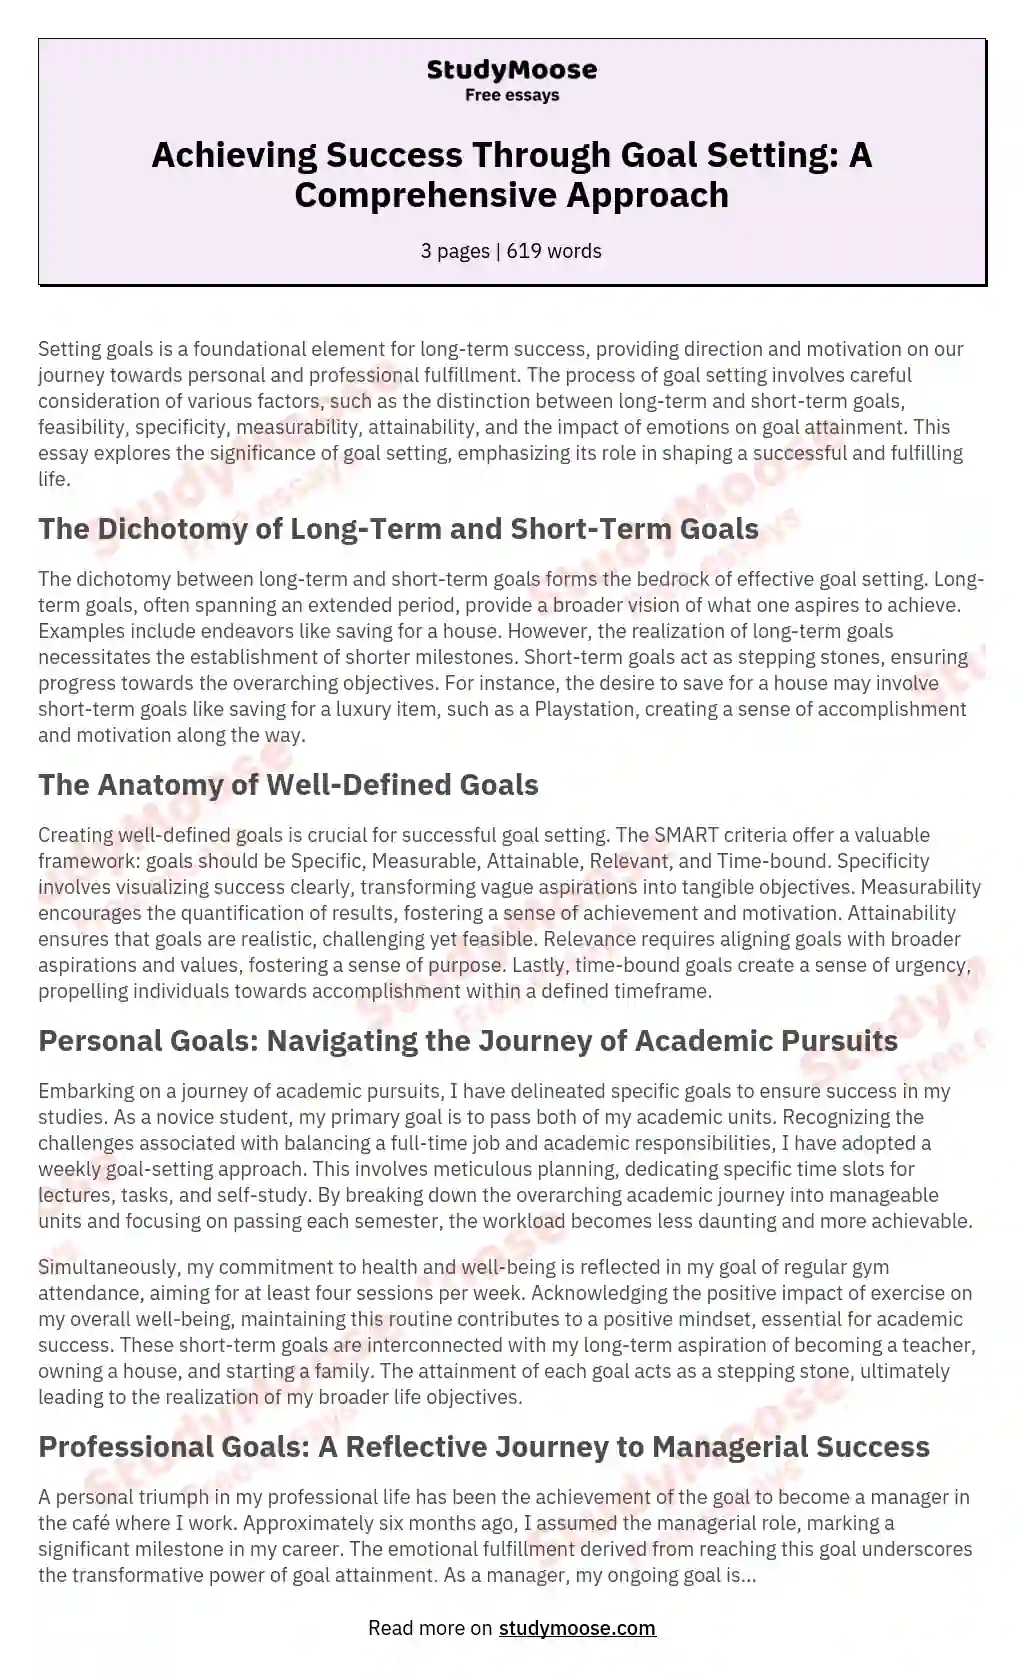 Achieving Success Through Goal Setting: A Comprehensive Approach essay